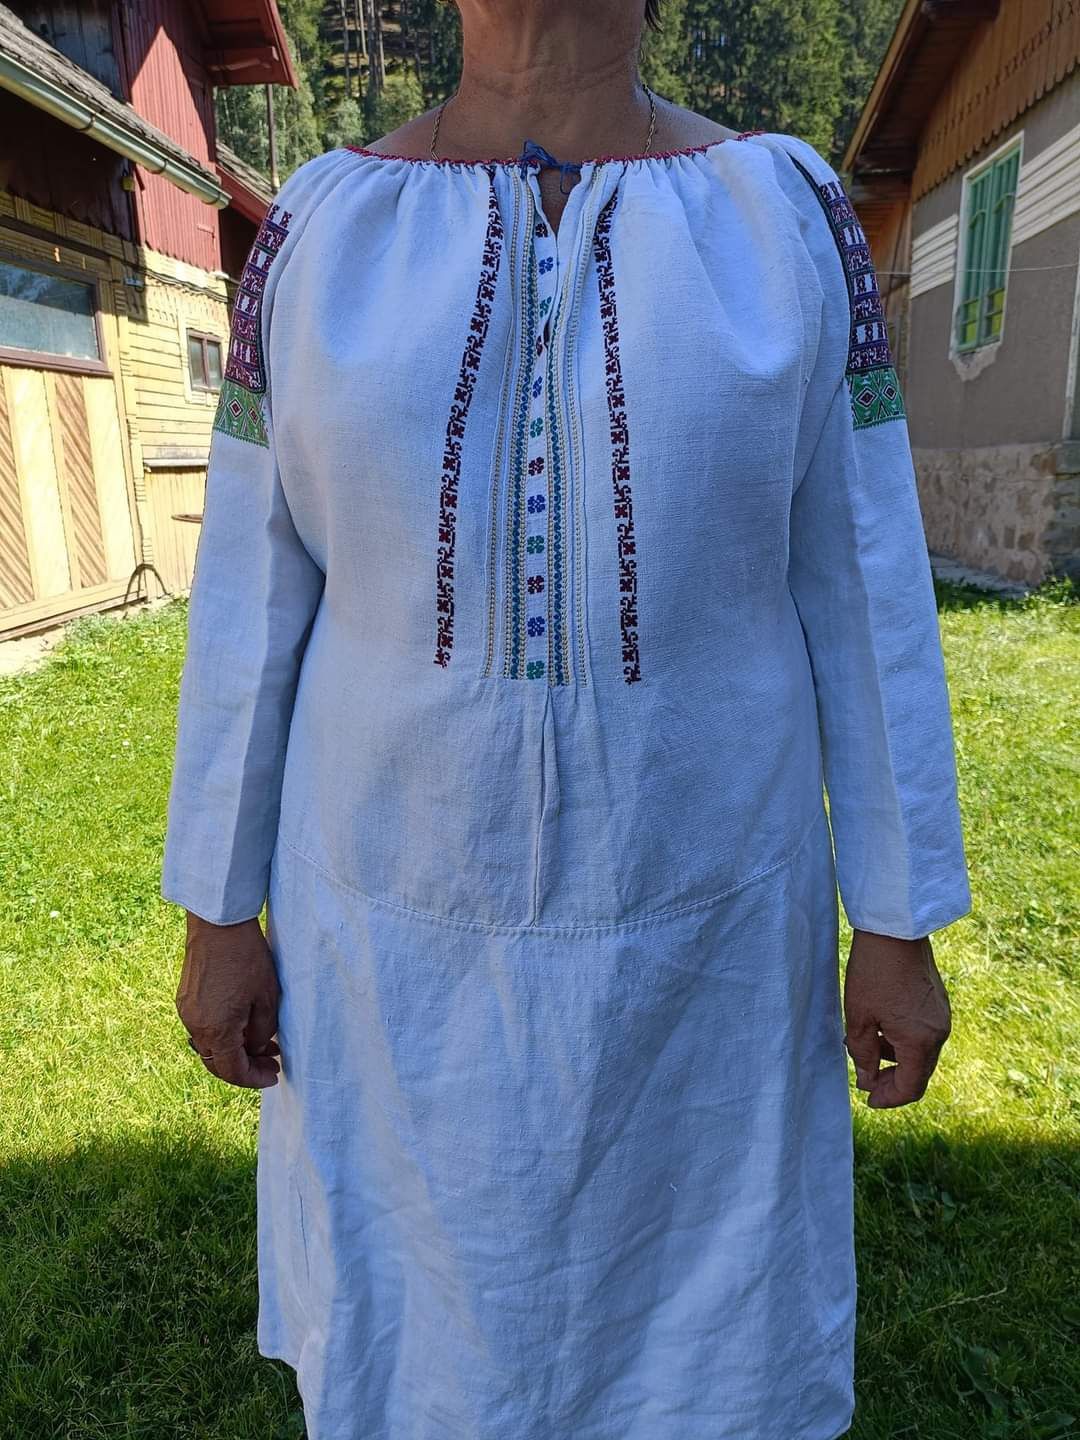 Ie/costum popular/cămașa tradiționala/Bucovina/port popular